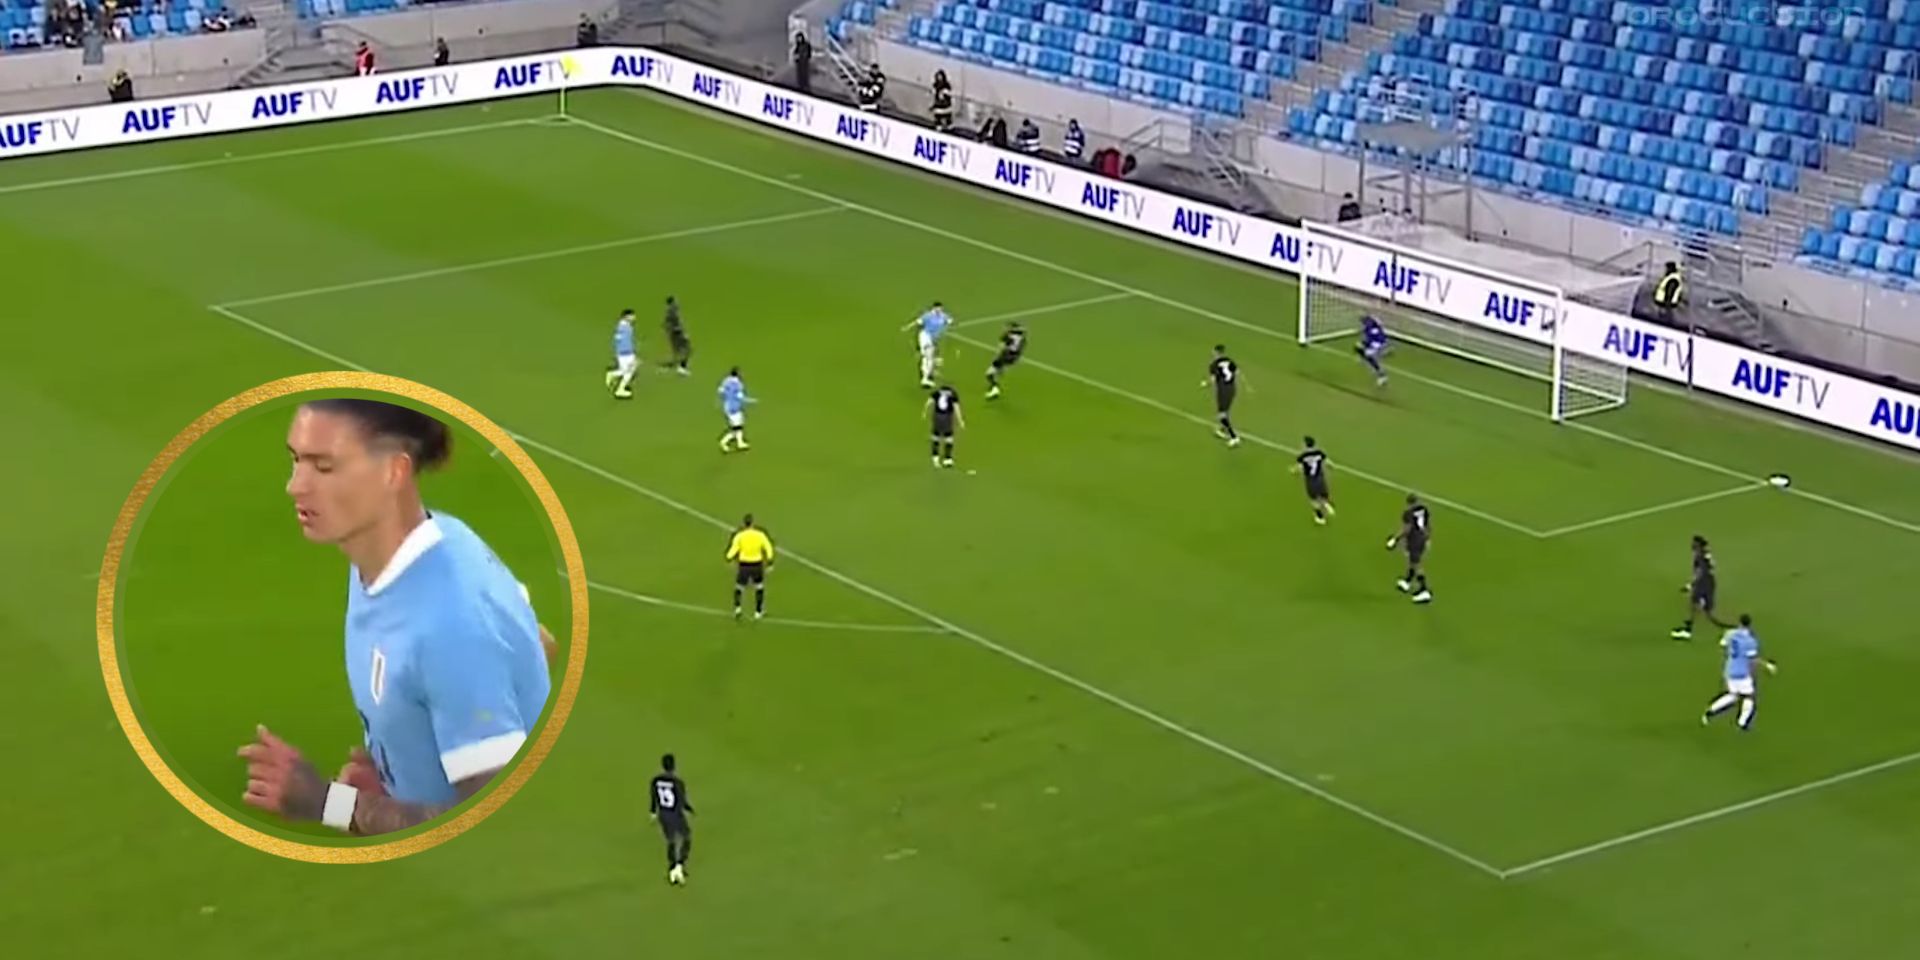 (Video) Darwin Nunez’s personal highlights on a goal-scoring evening for Uruguay